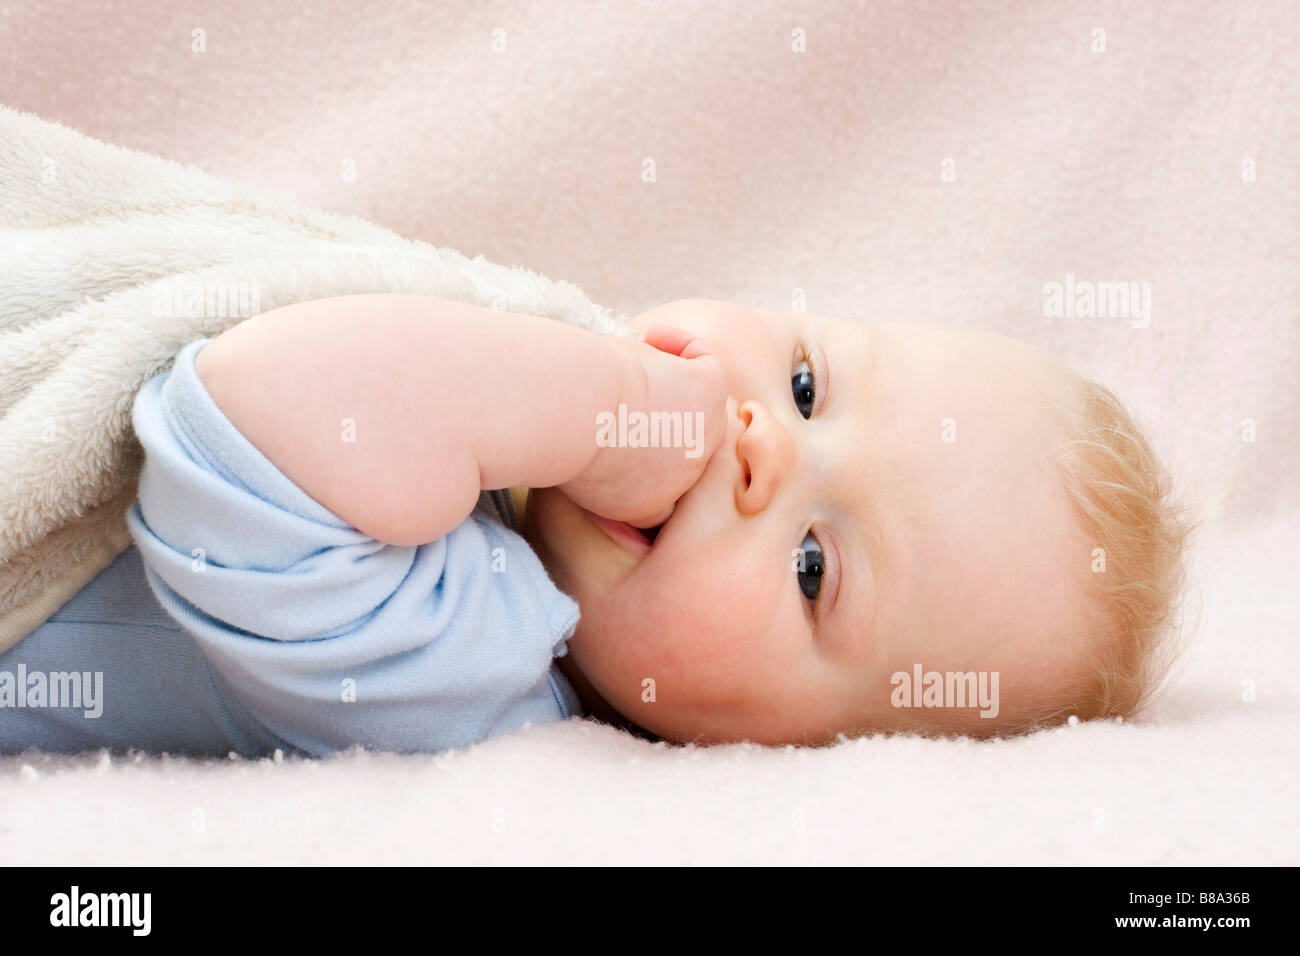 Liegenden Säugling Baby 7 Monate alt Stockfoto